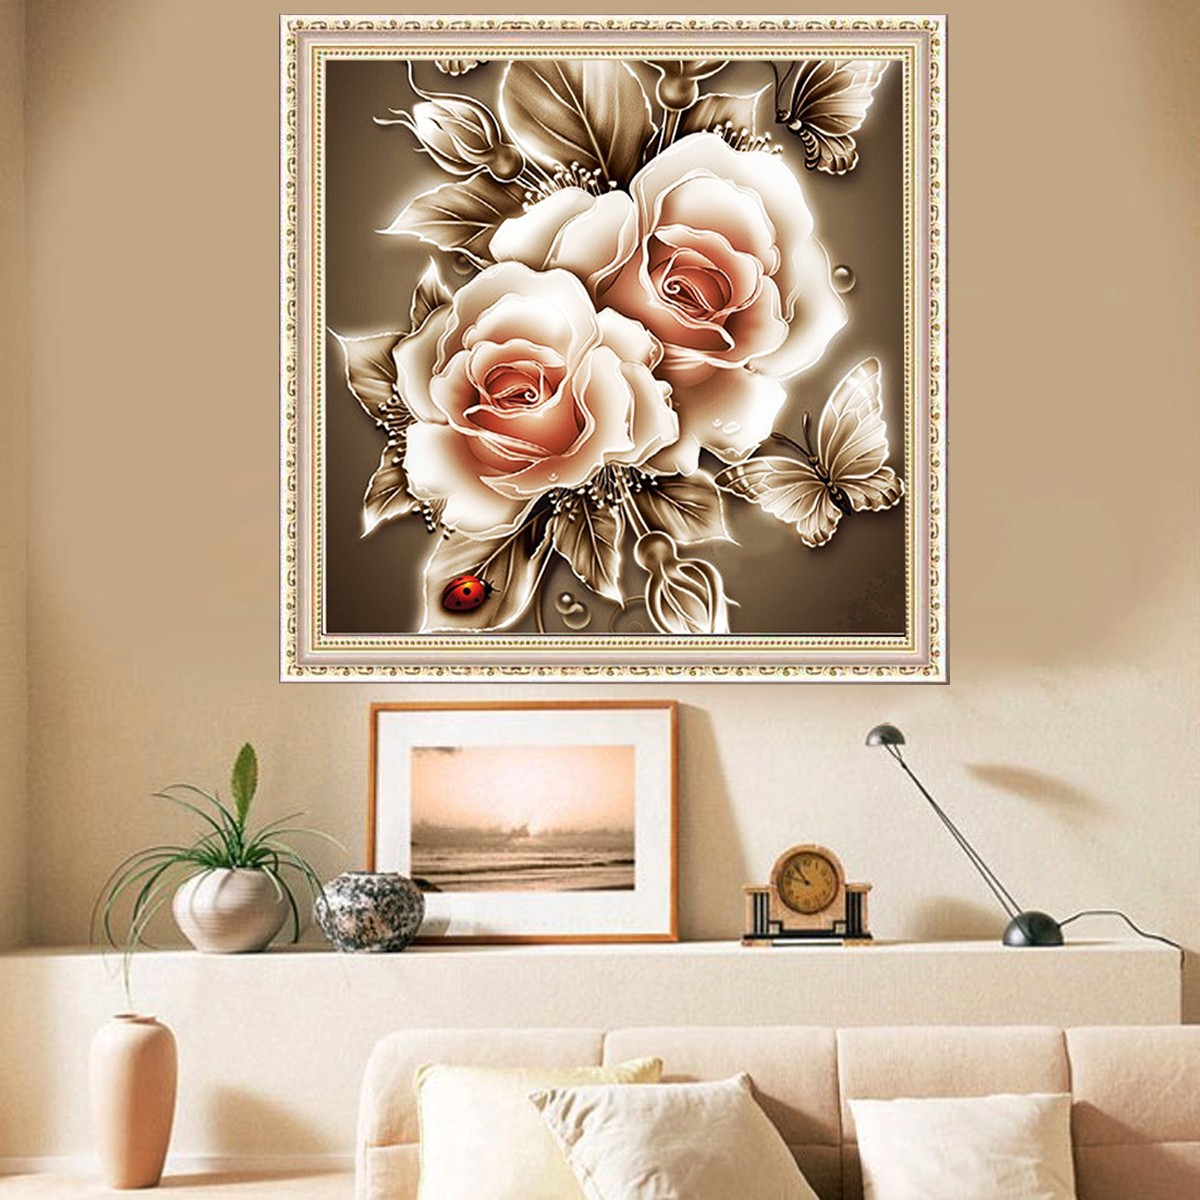 DIY-5D-Diamond-Painting-Kit-Retro-Flower-Handmade-Craft-Cross-Stitch-Embroidery-Home-Office-Wall-Dec-1350574-4